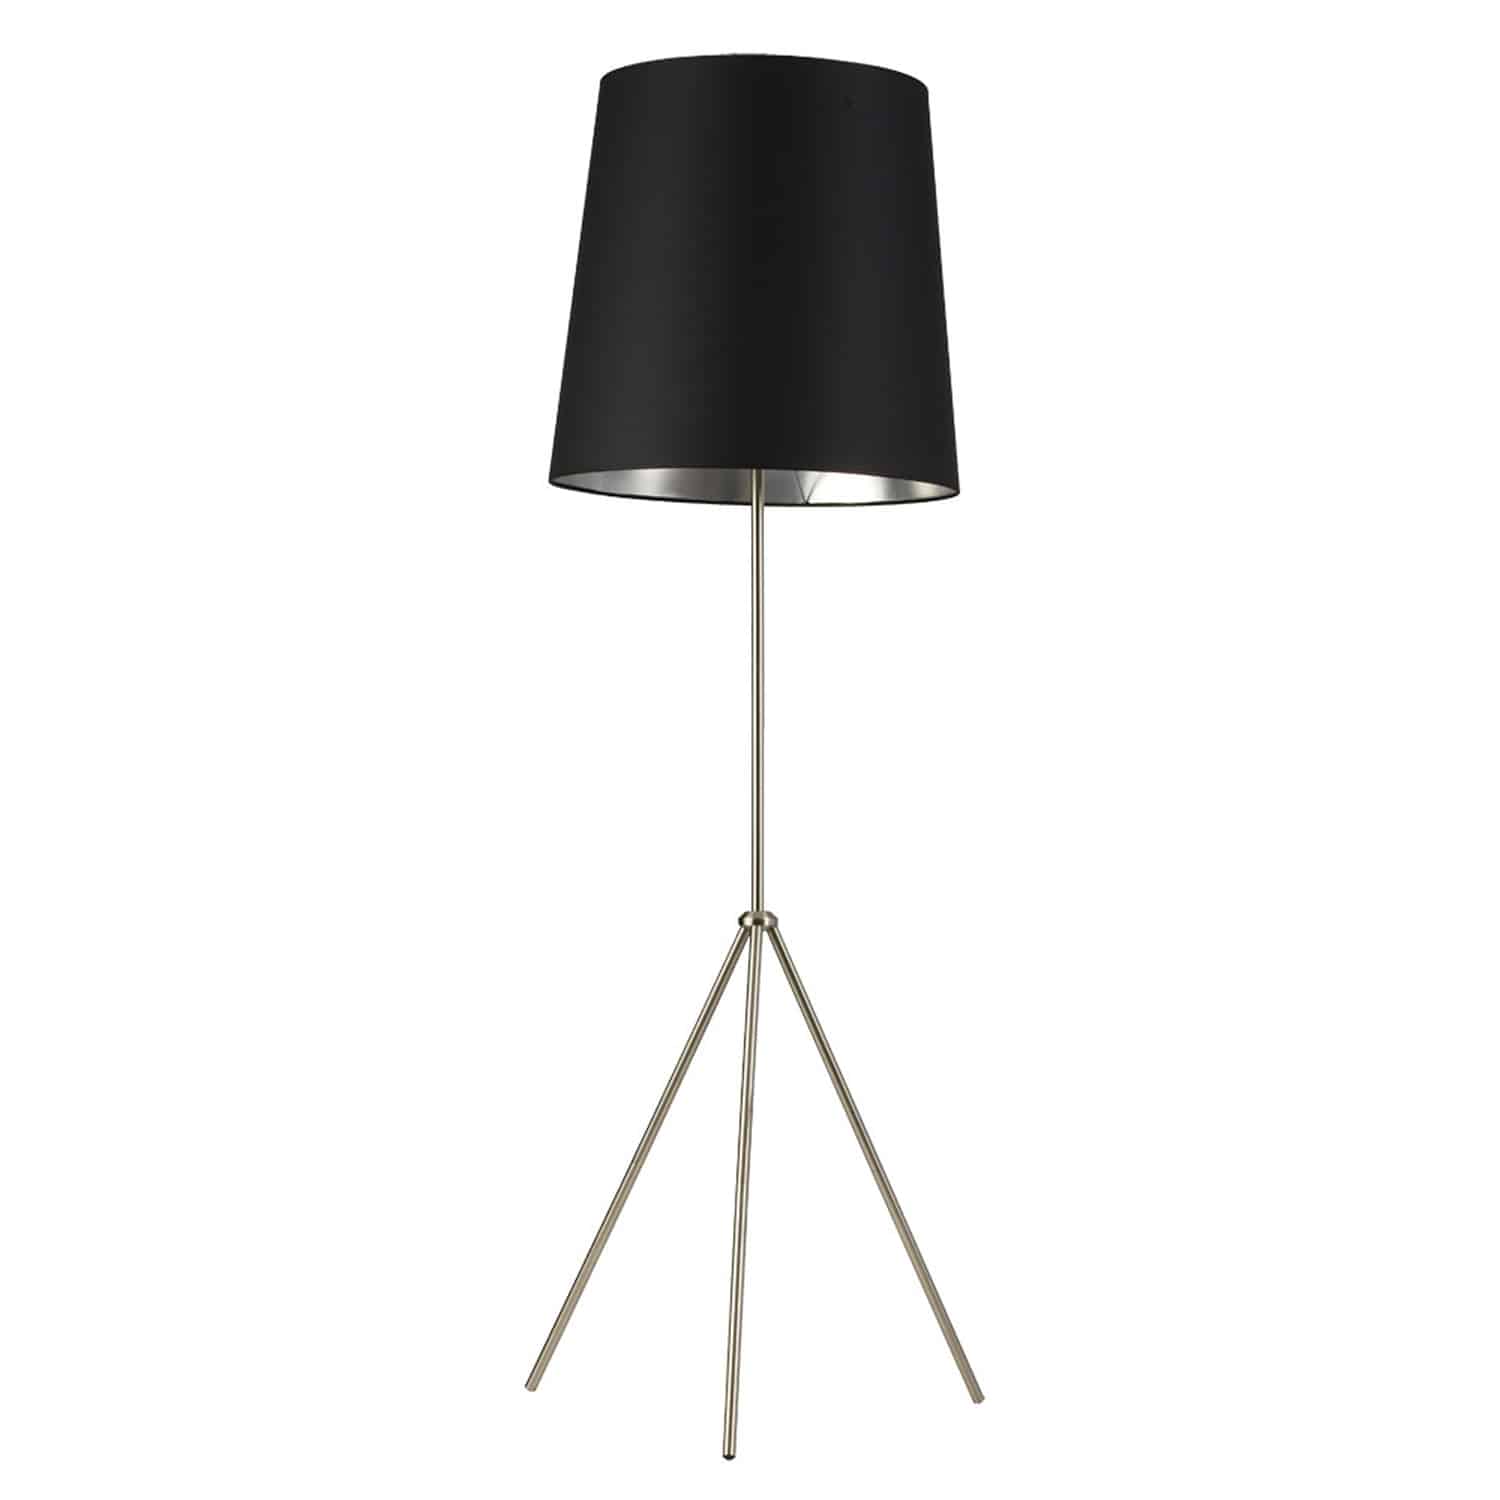 Tripod Floor Lamp (Decorative)